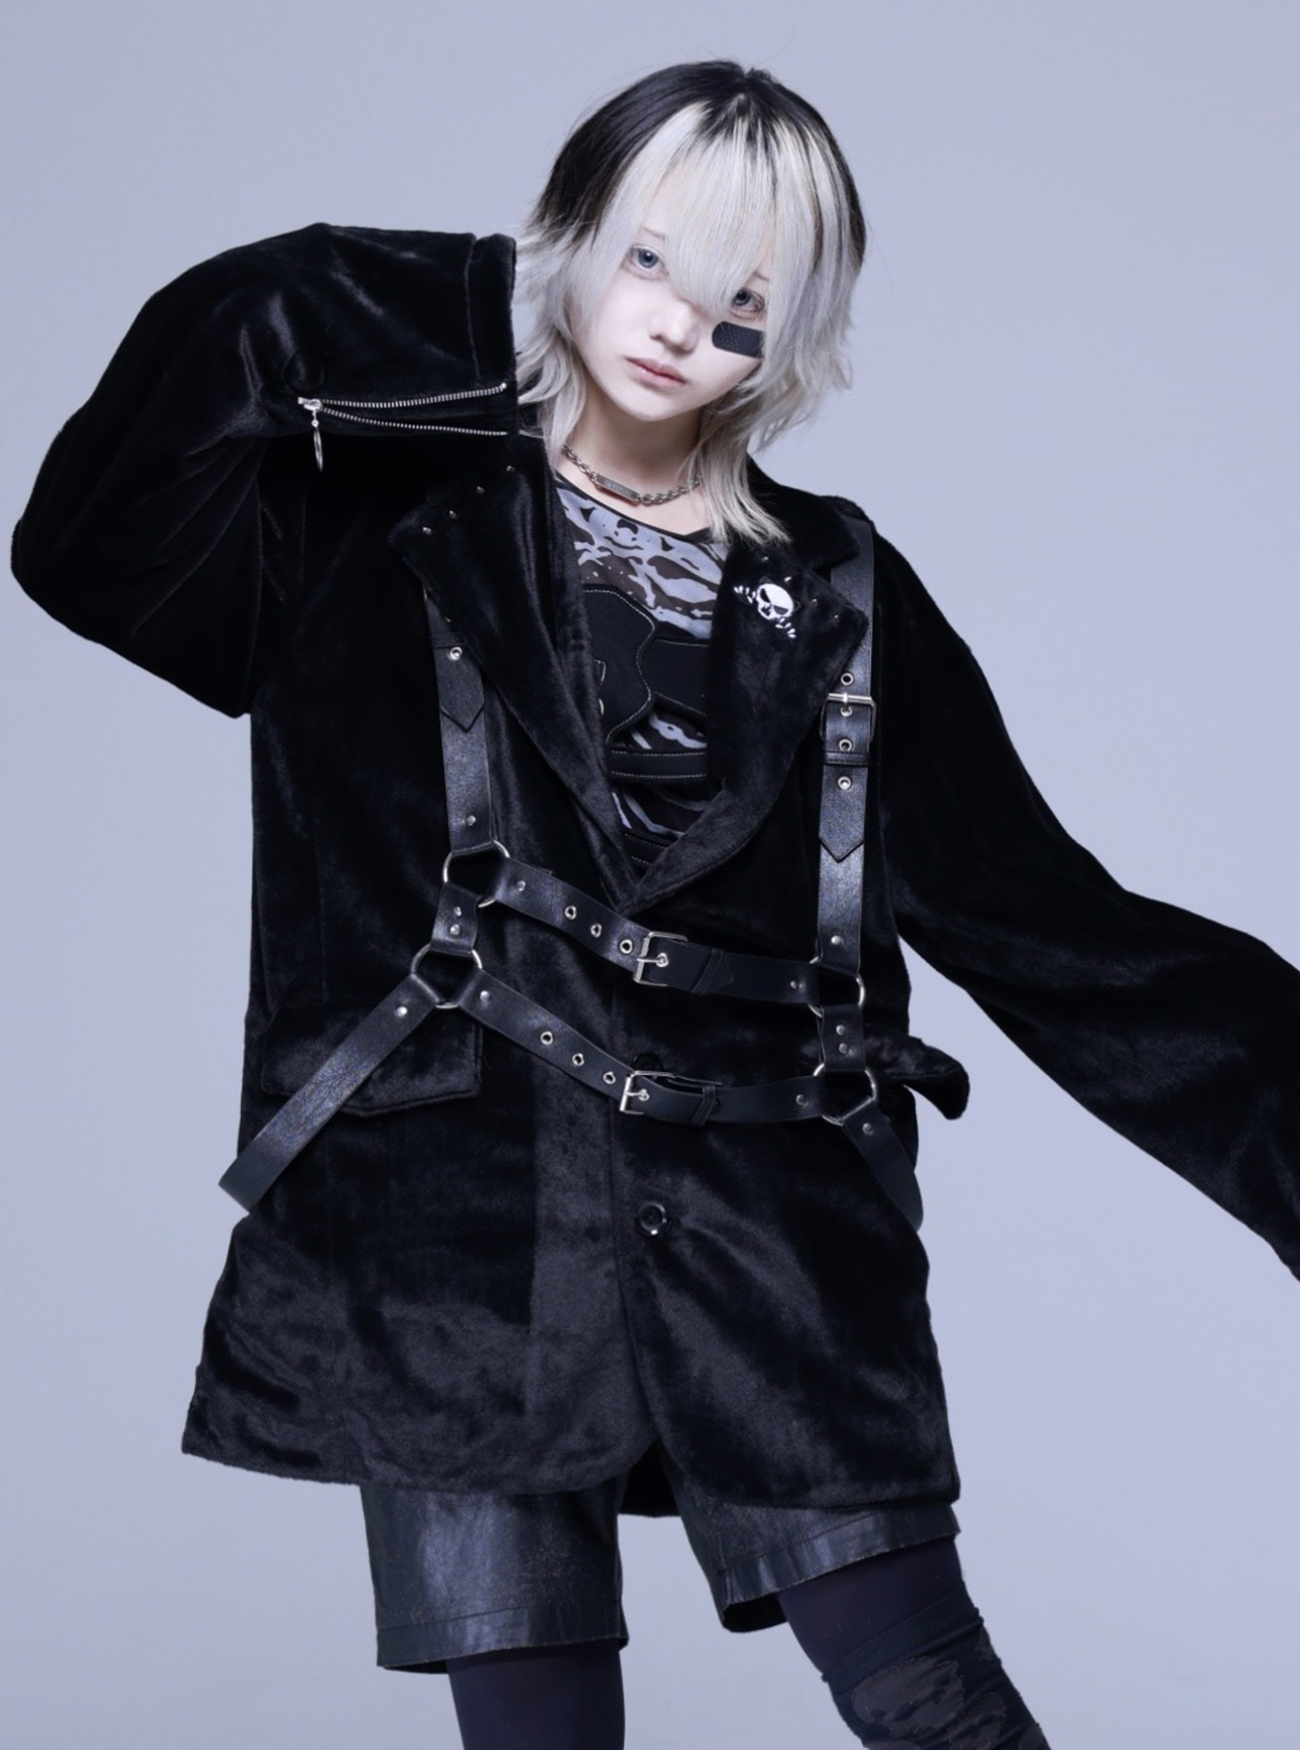 [Gamchu] Fur jacket with harness belt